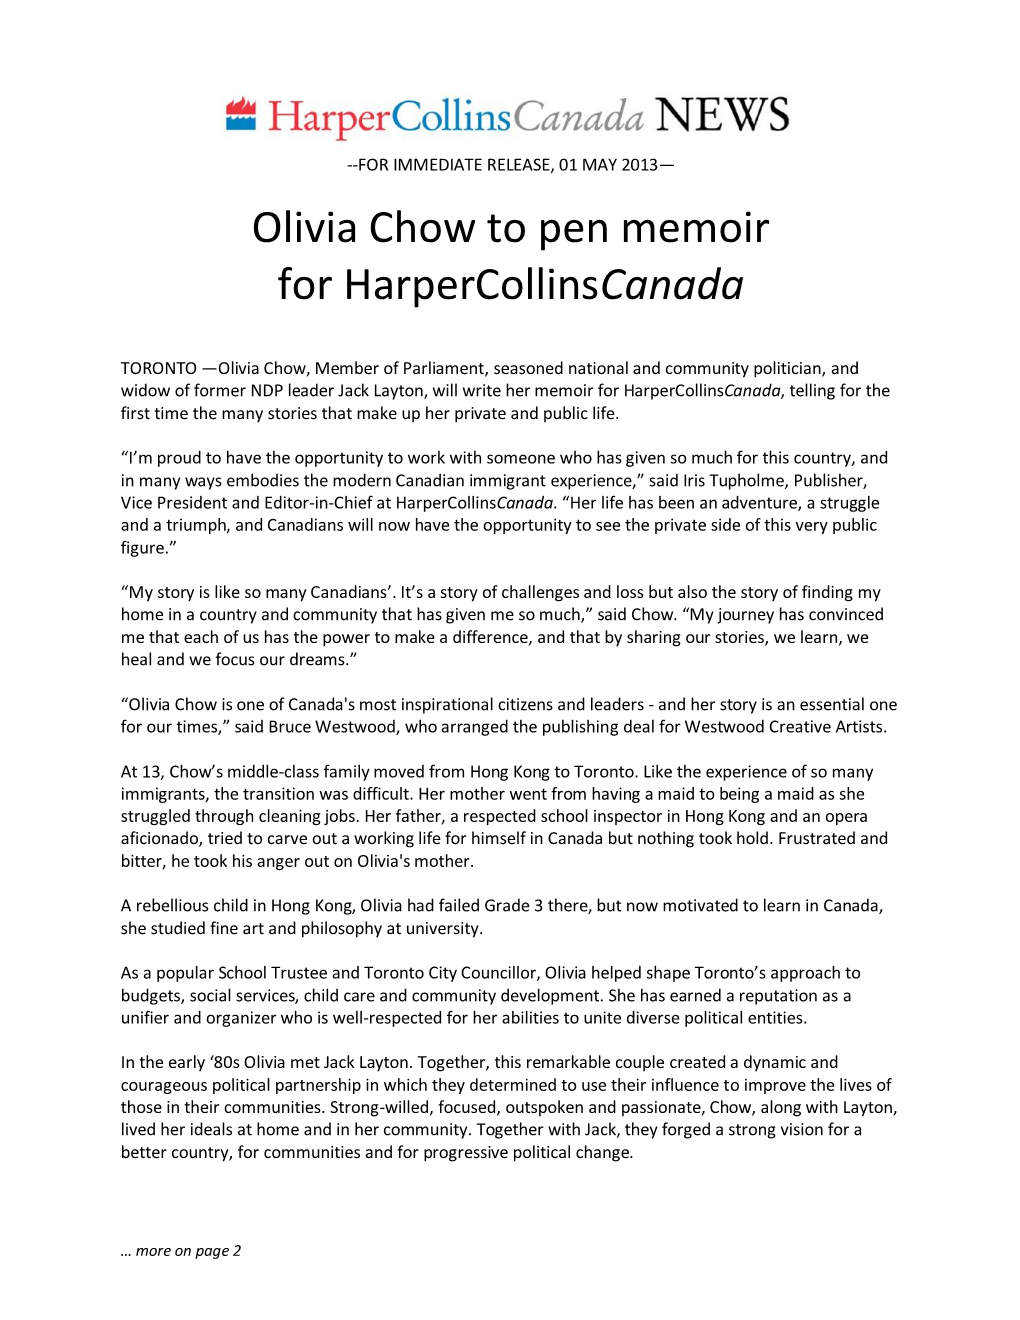 Olivia Chow to Pen Memoir for Harpercollinscanada